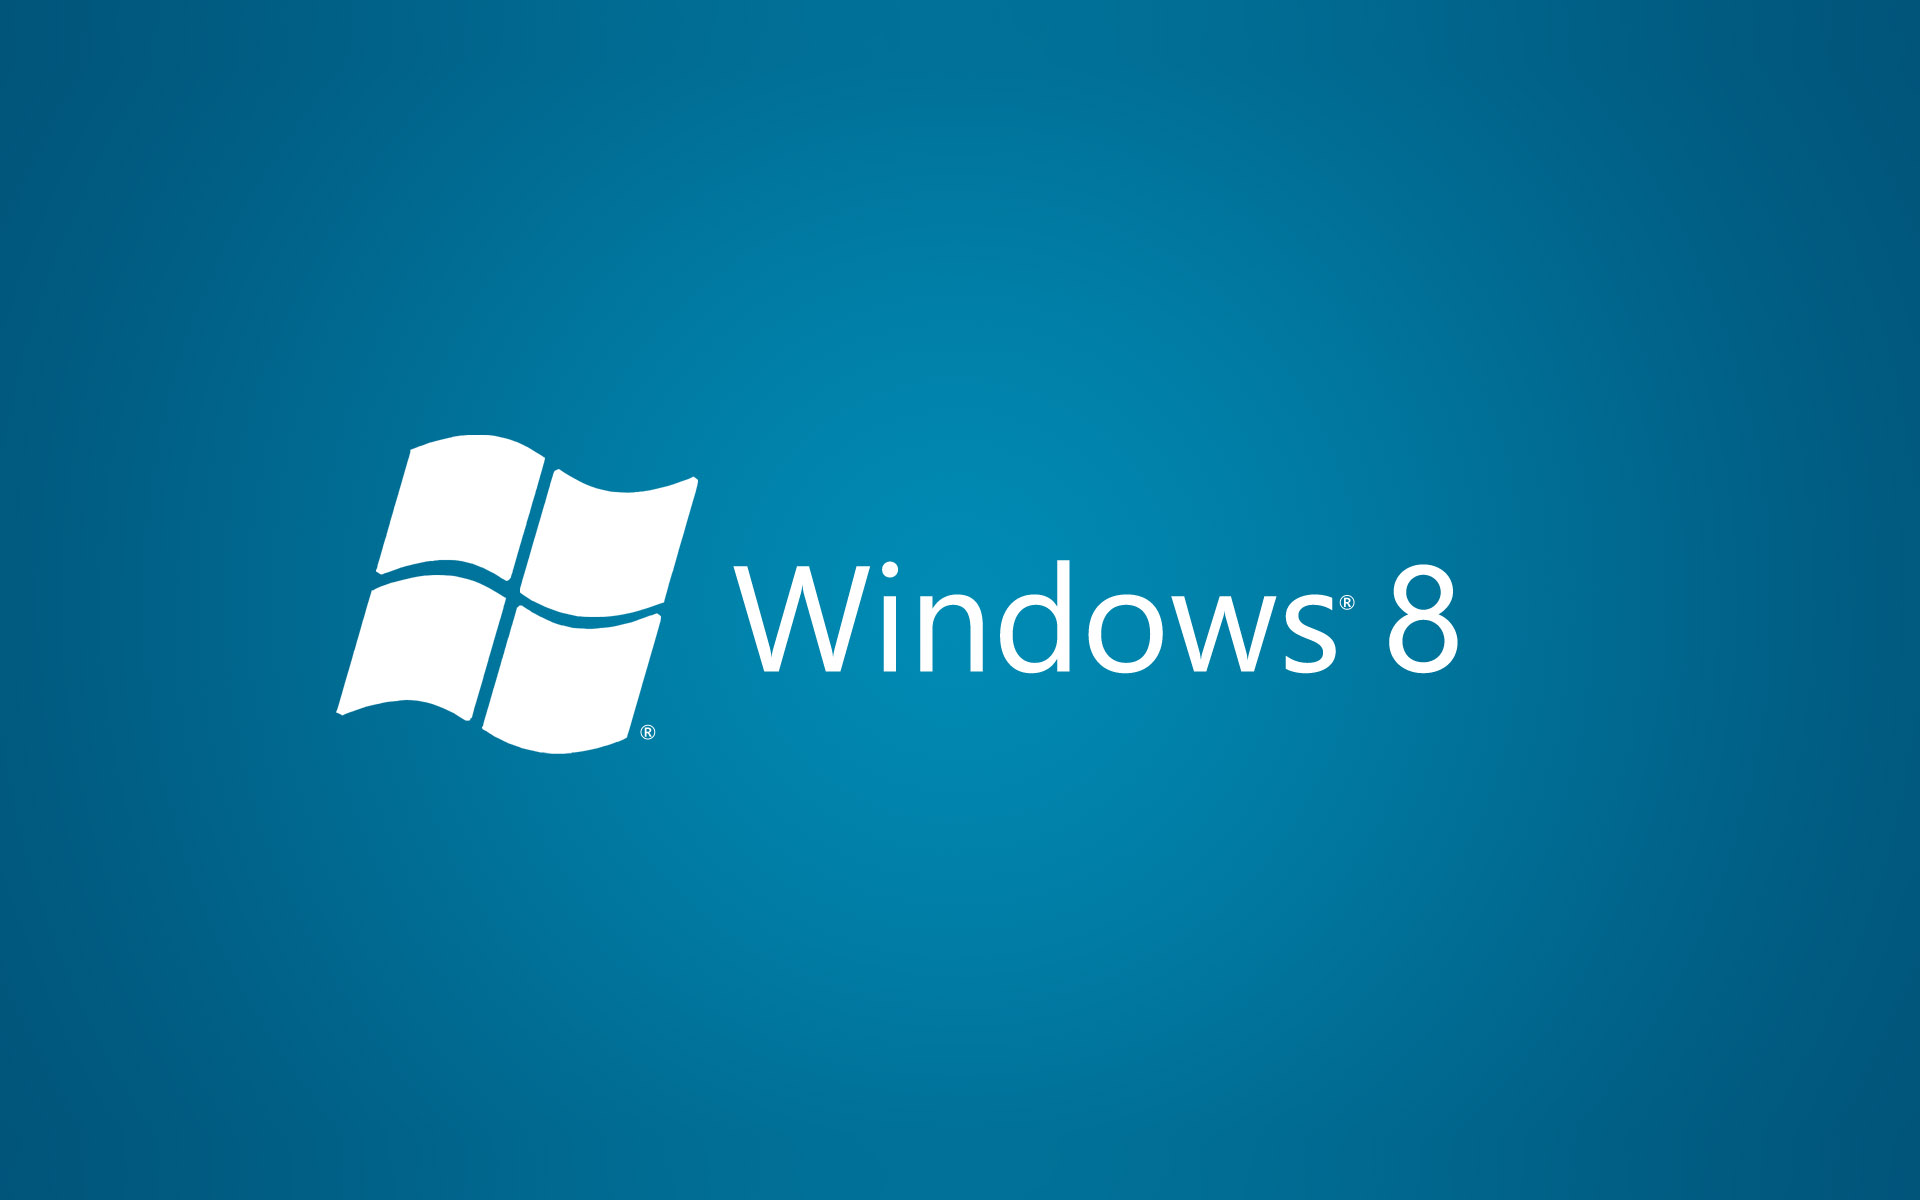 Windows Big Logo Wide Image Puters